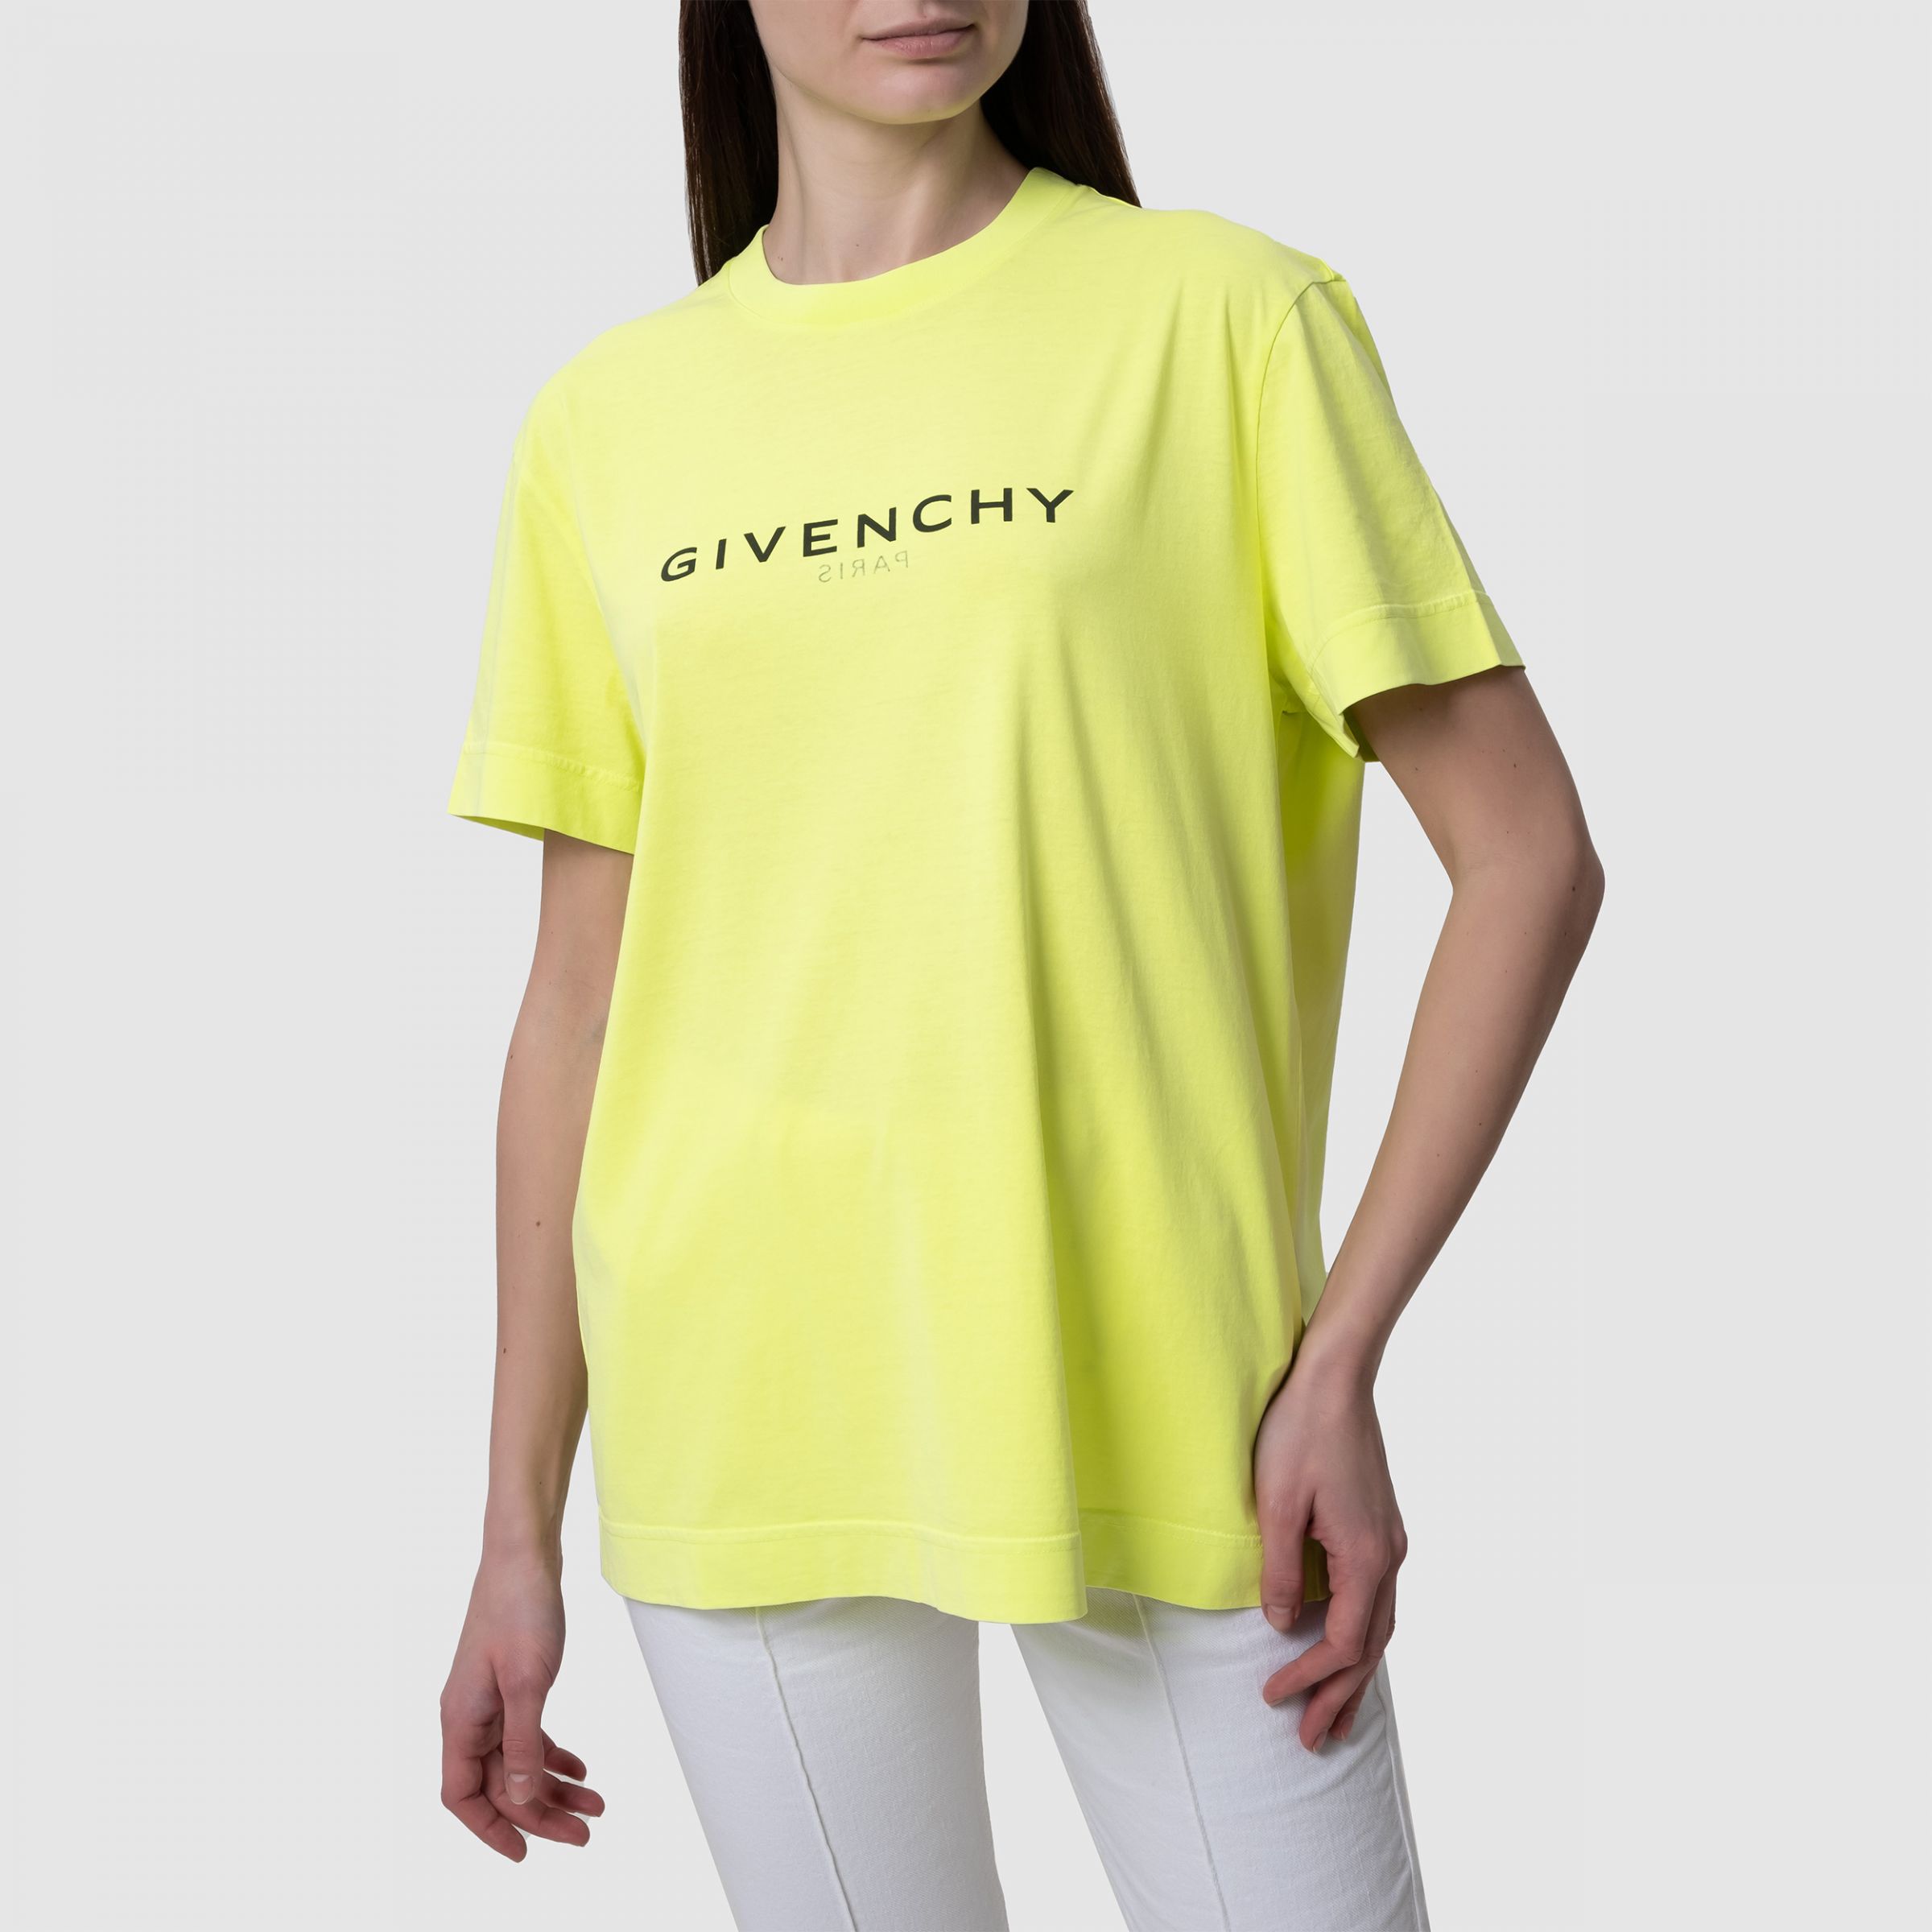 Футболка Givenchy желтая